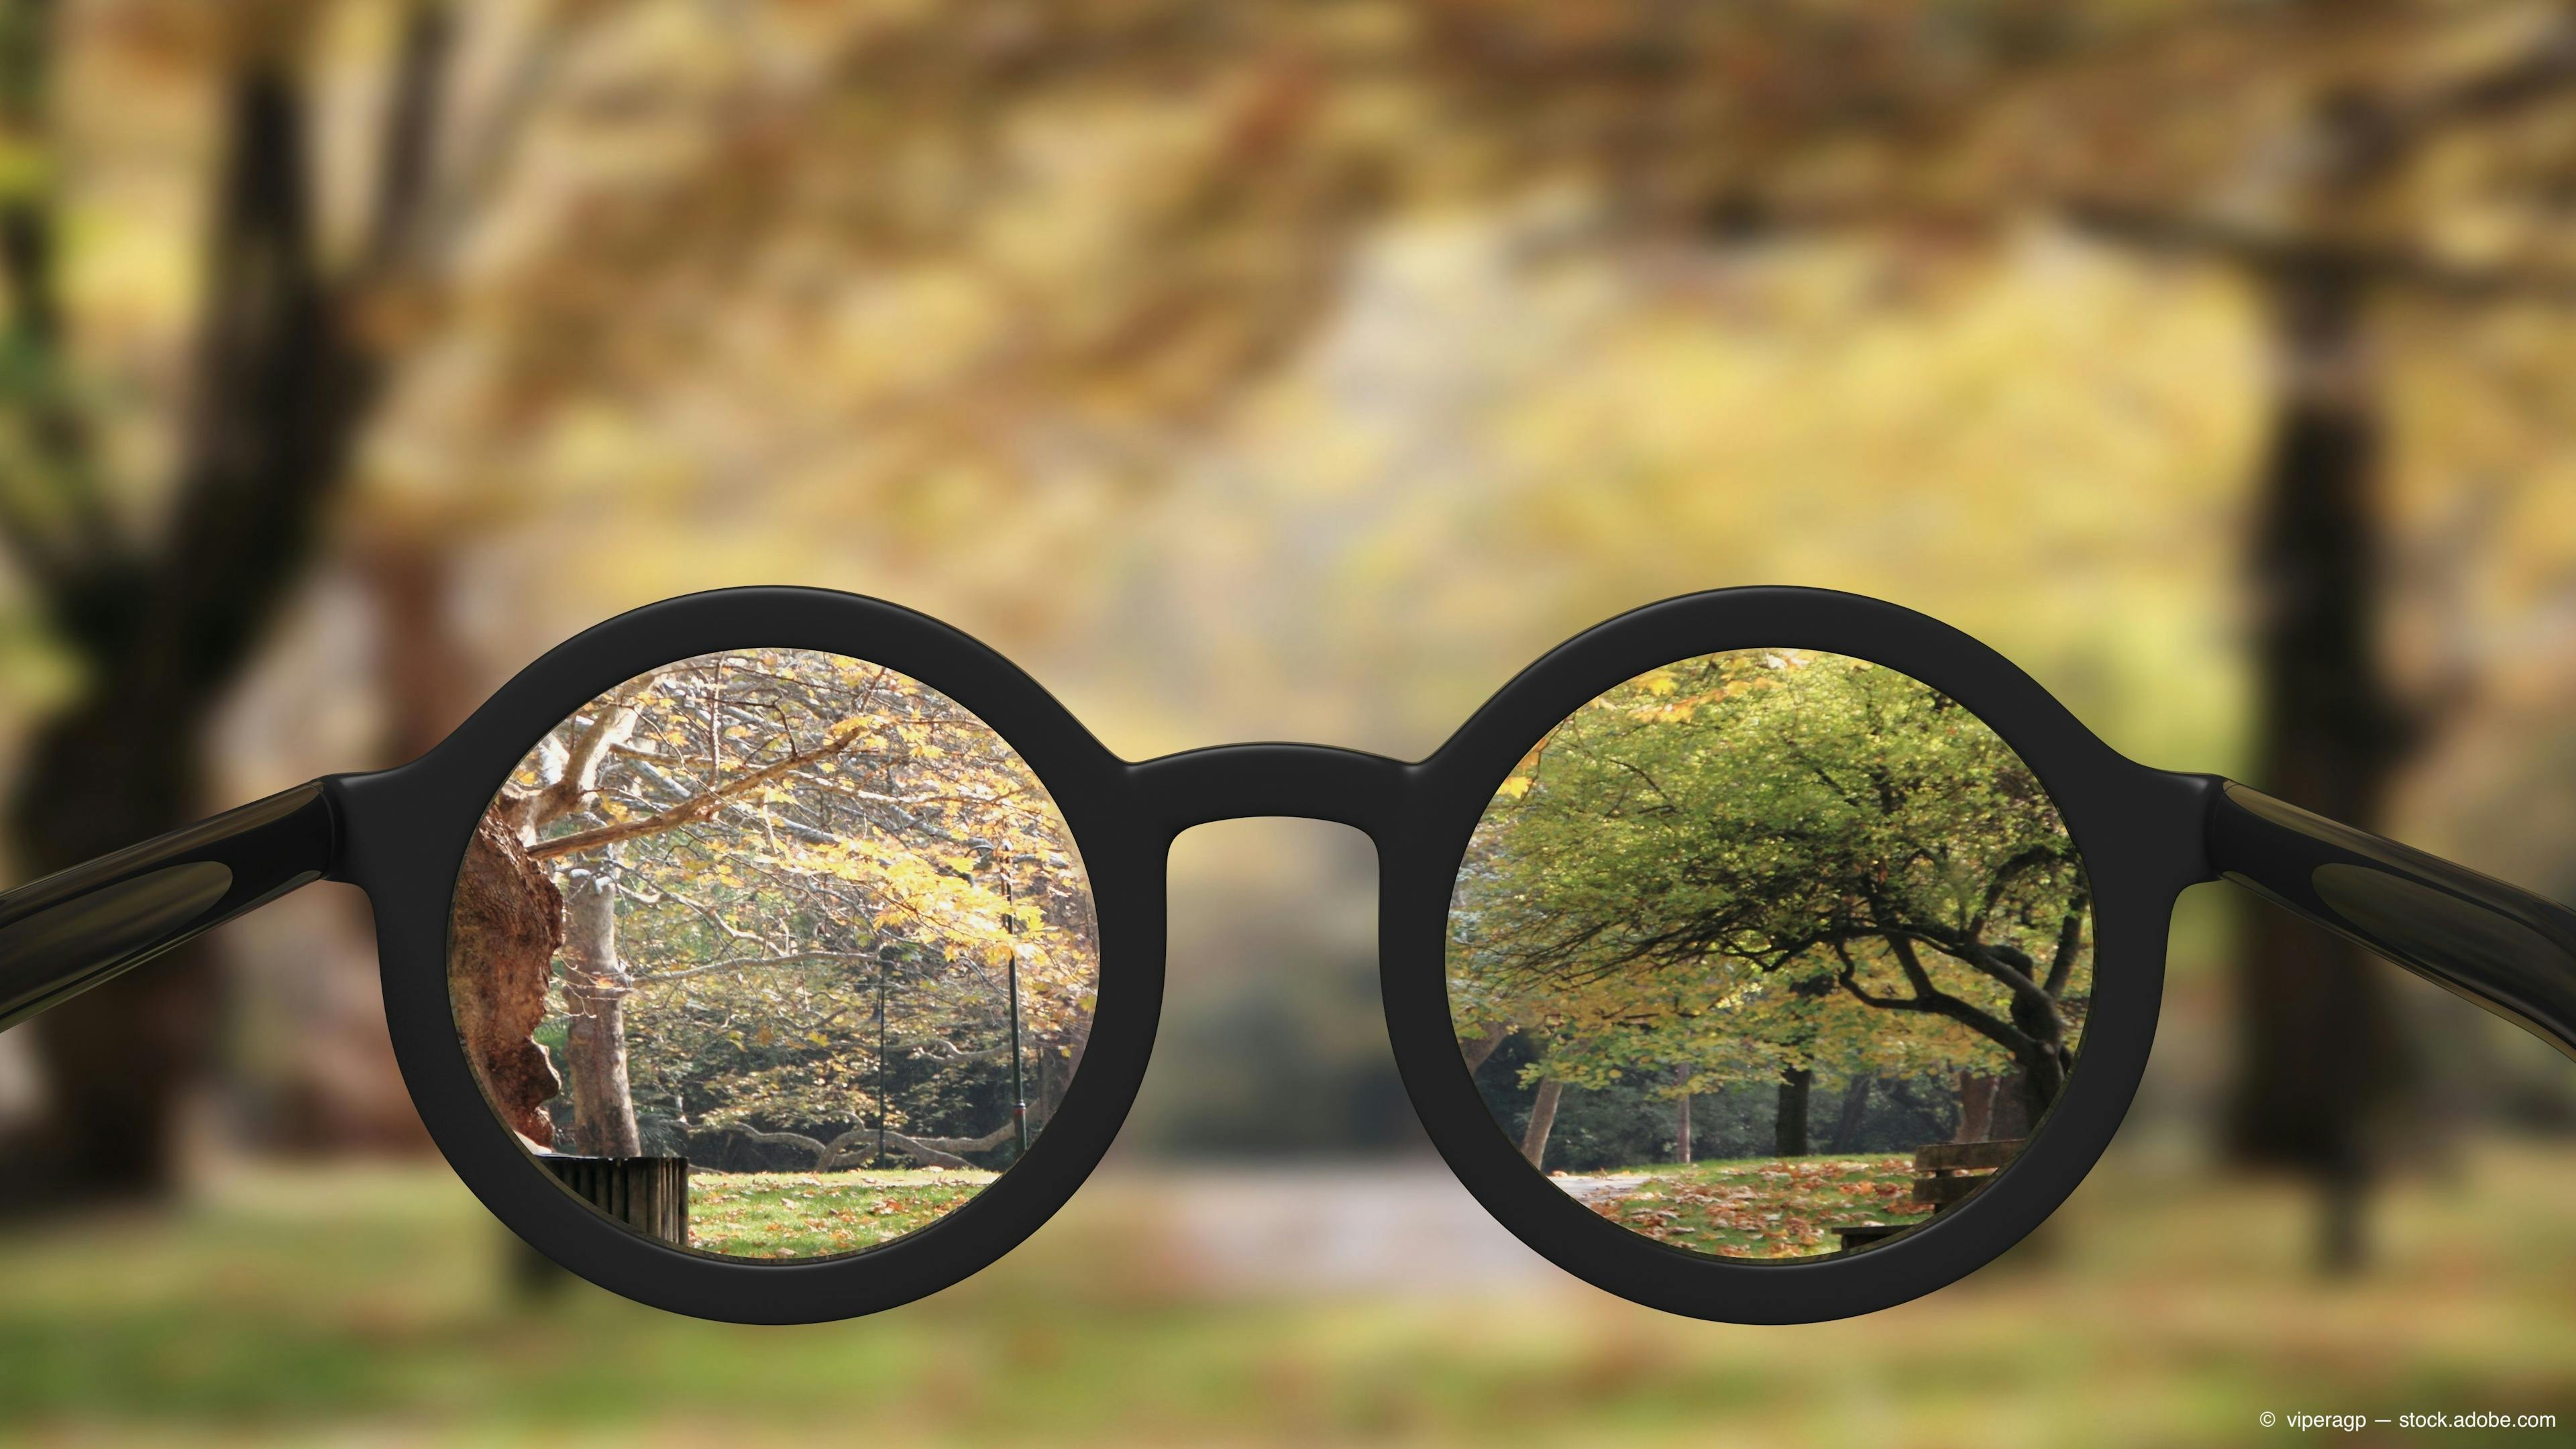 AAO: Myopia progression slowed with orthokeratology, multifocal lenses 